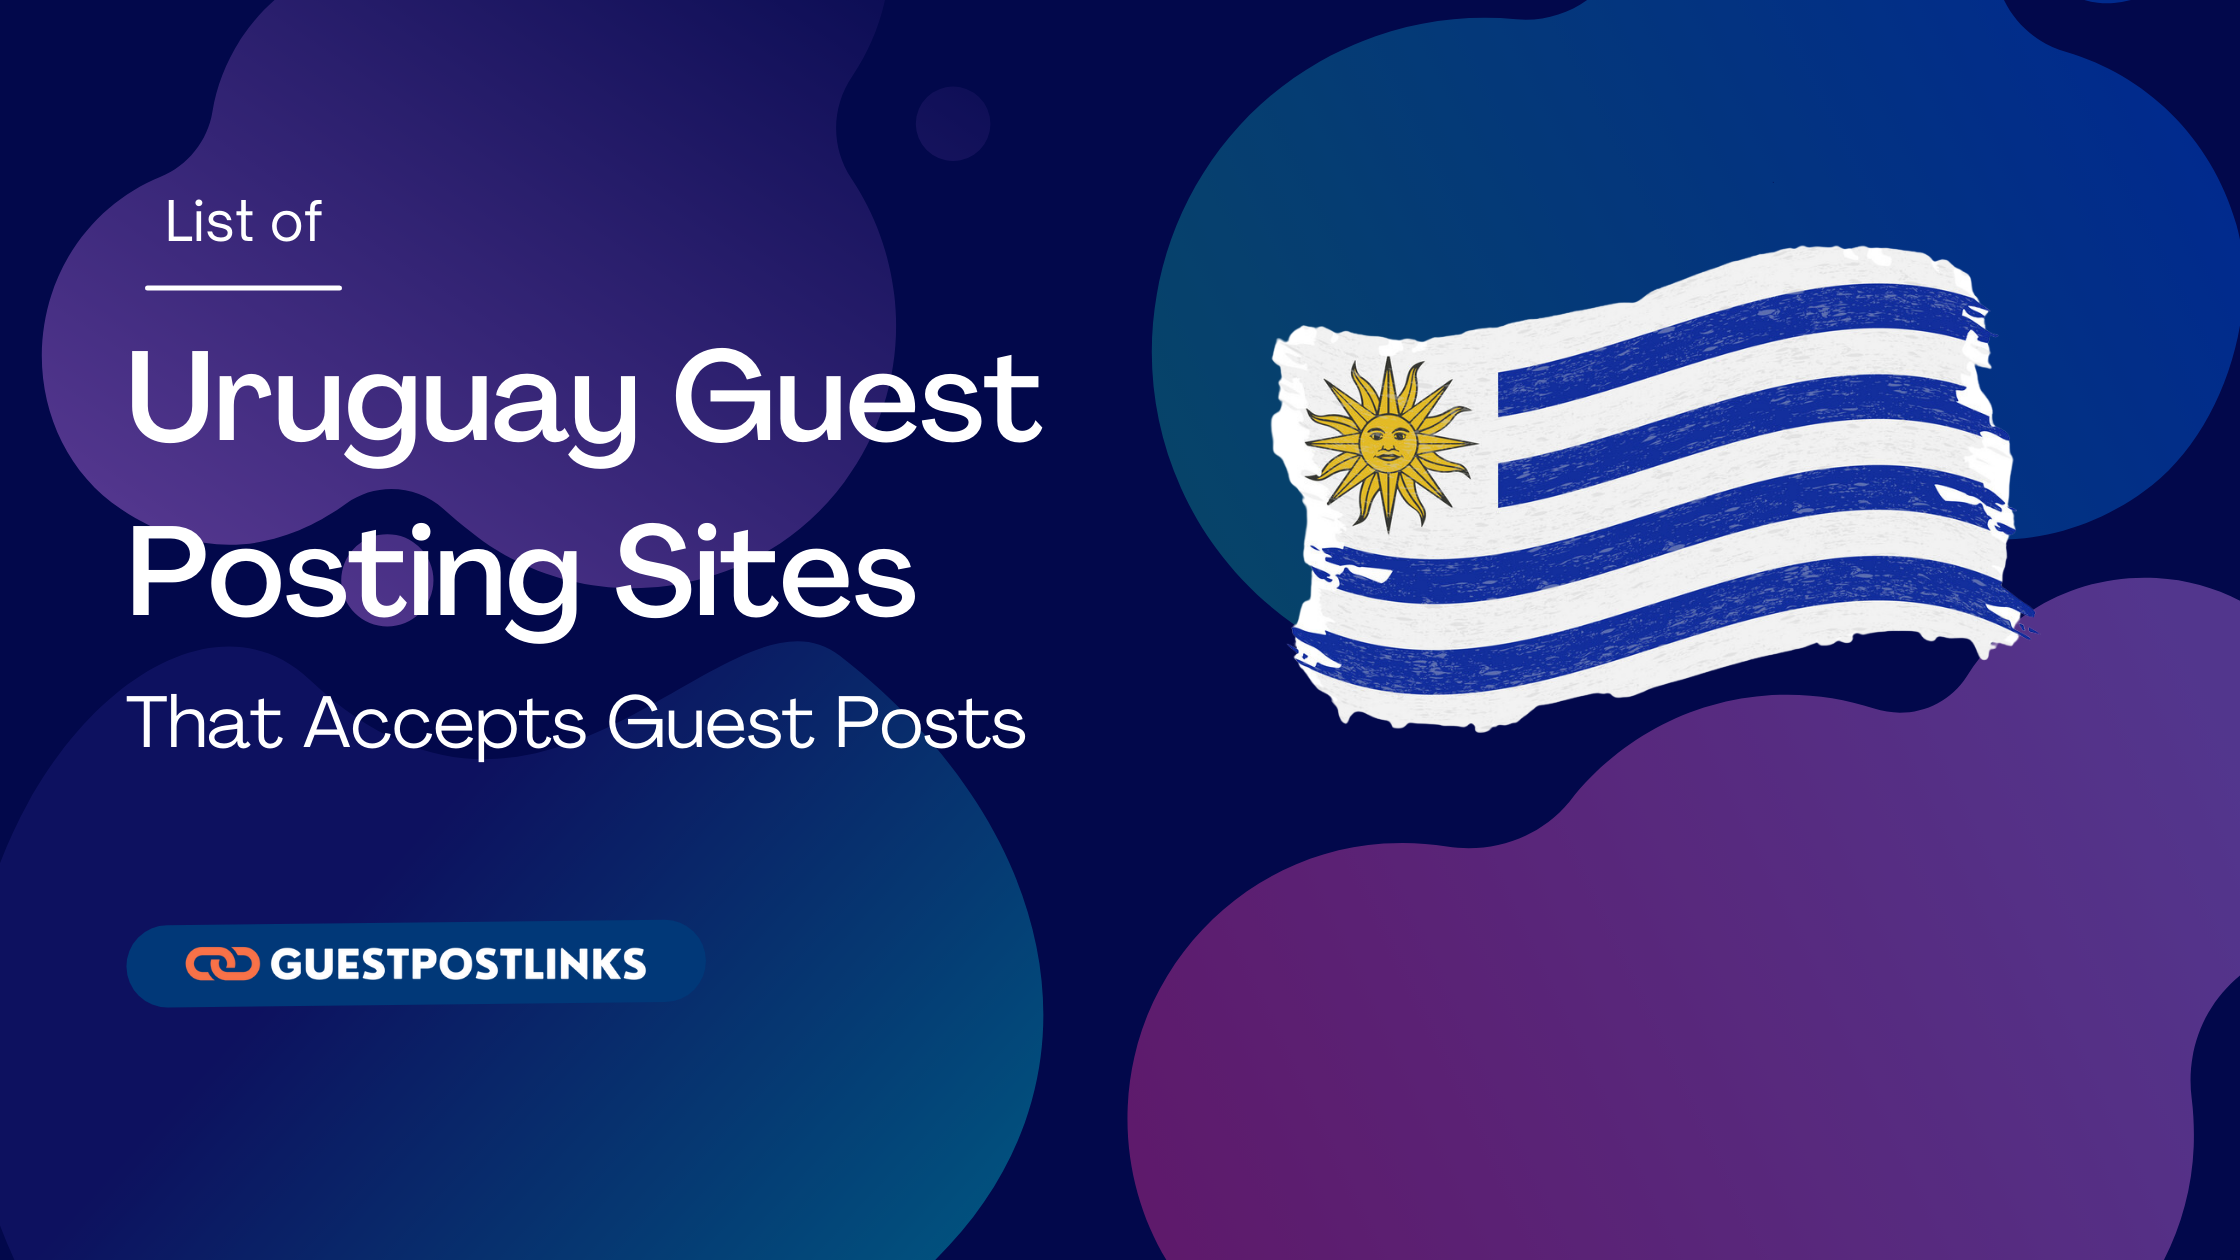 Uruguay Guest Posting Sites List